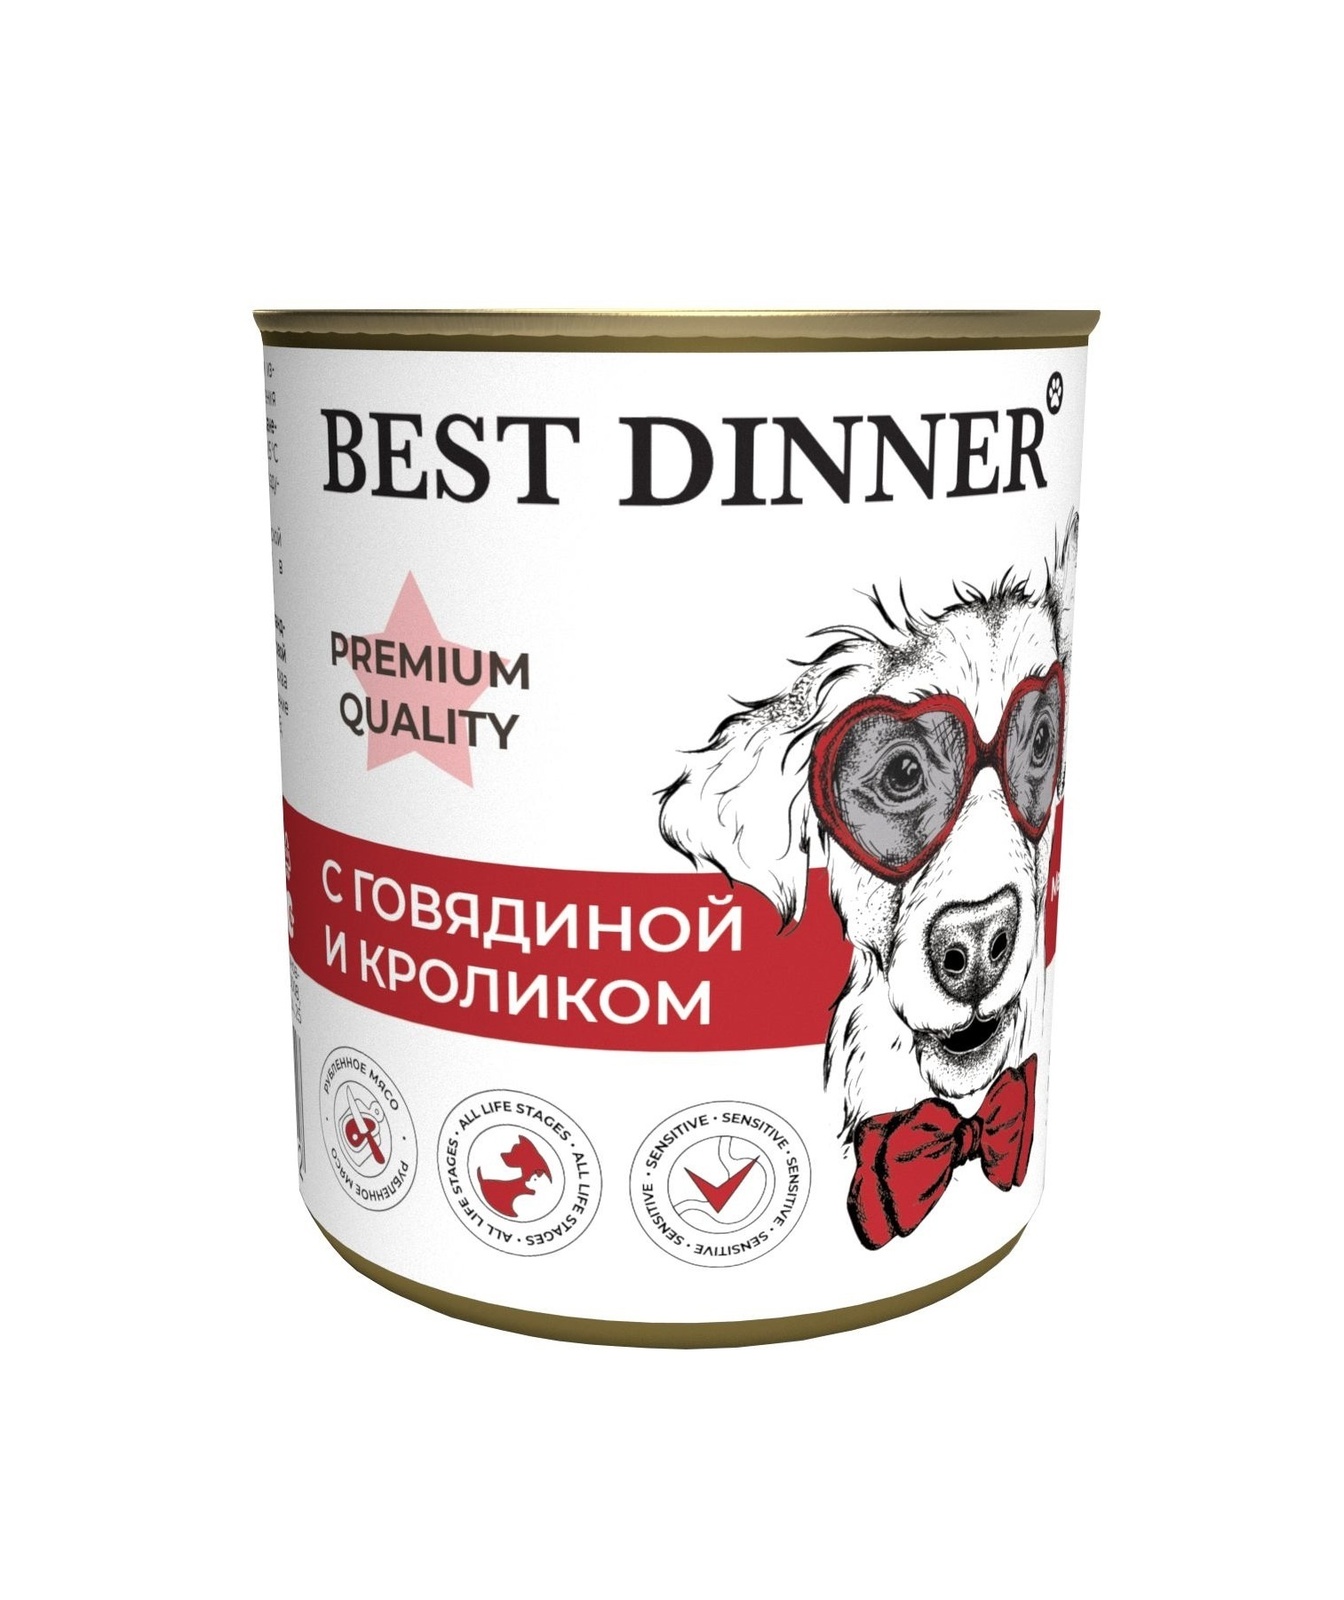 Best Dinner Best Dinner консервы Premium меню №3 С говядиной и кроликом (340 г) best dinner best dinner консервы для собак super premium с перепелкой 340 г